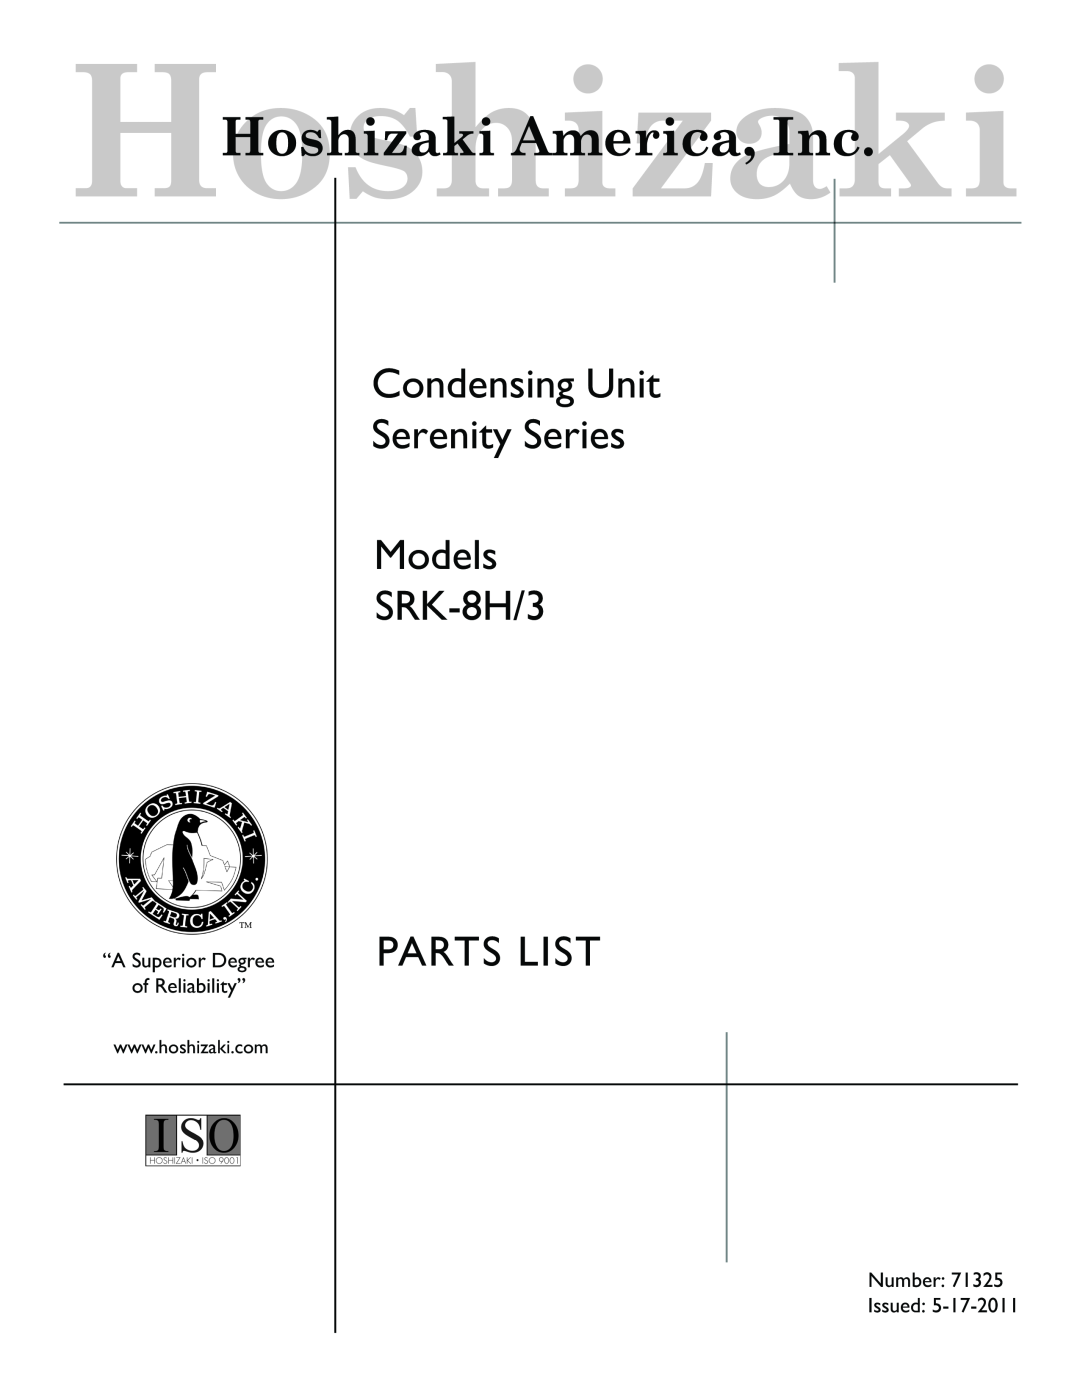 Hoshizaki manual Condensing Unit Serenity Series Models SRK-8H/3, Parts List, “A Superior Degree of Reliability” 